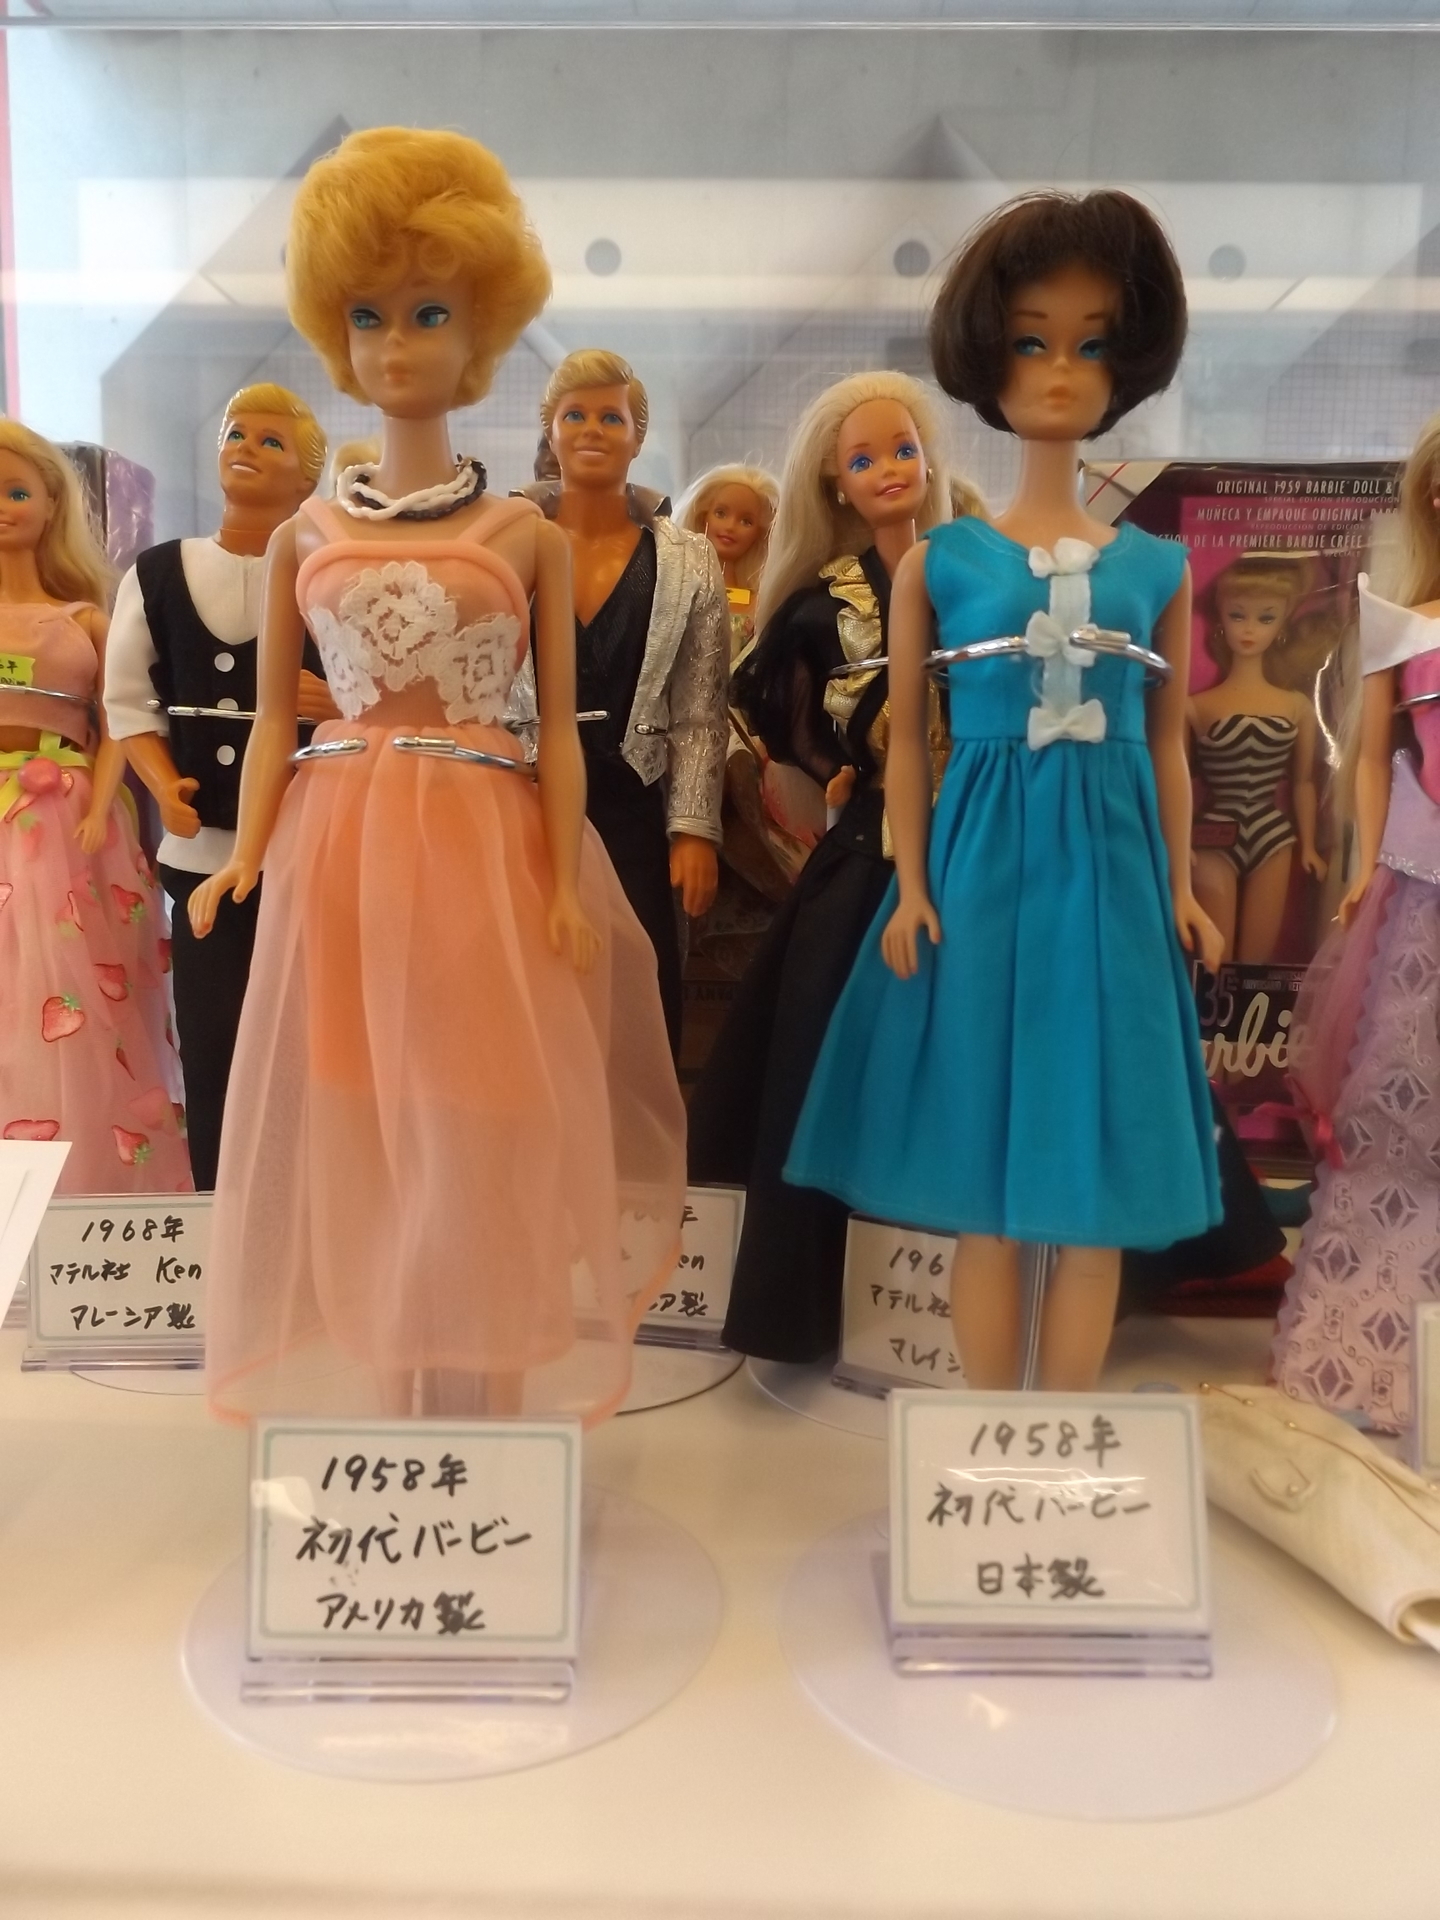 1958 barbie doll